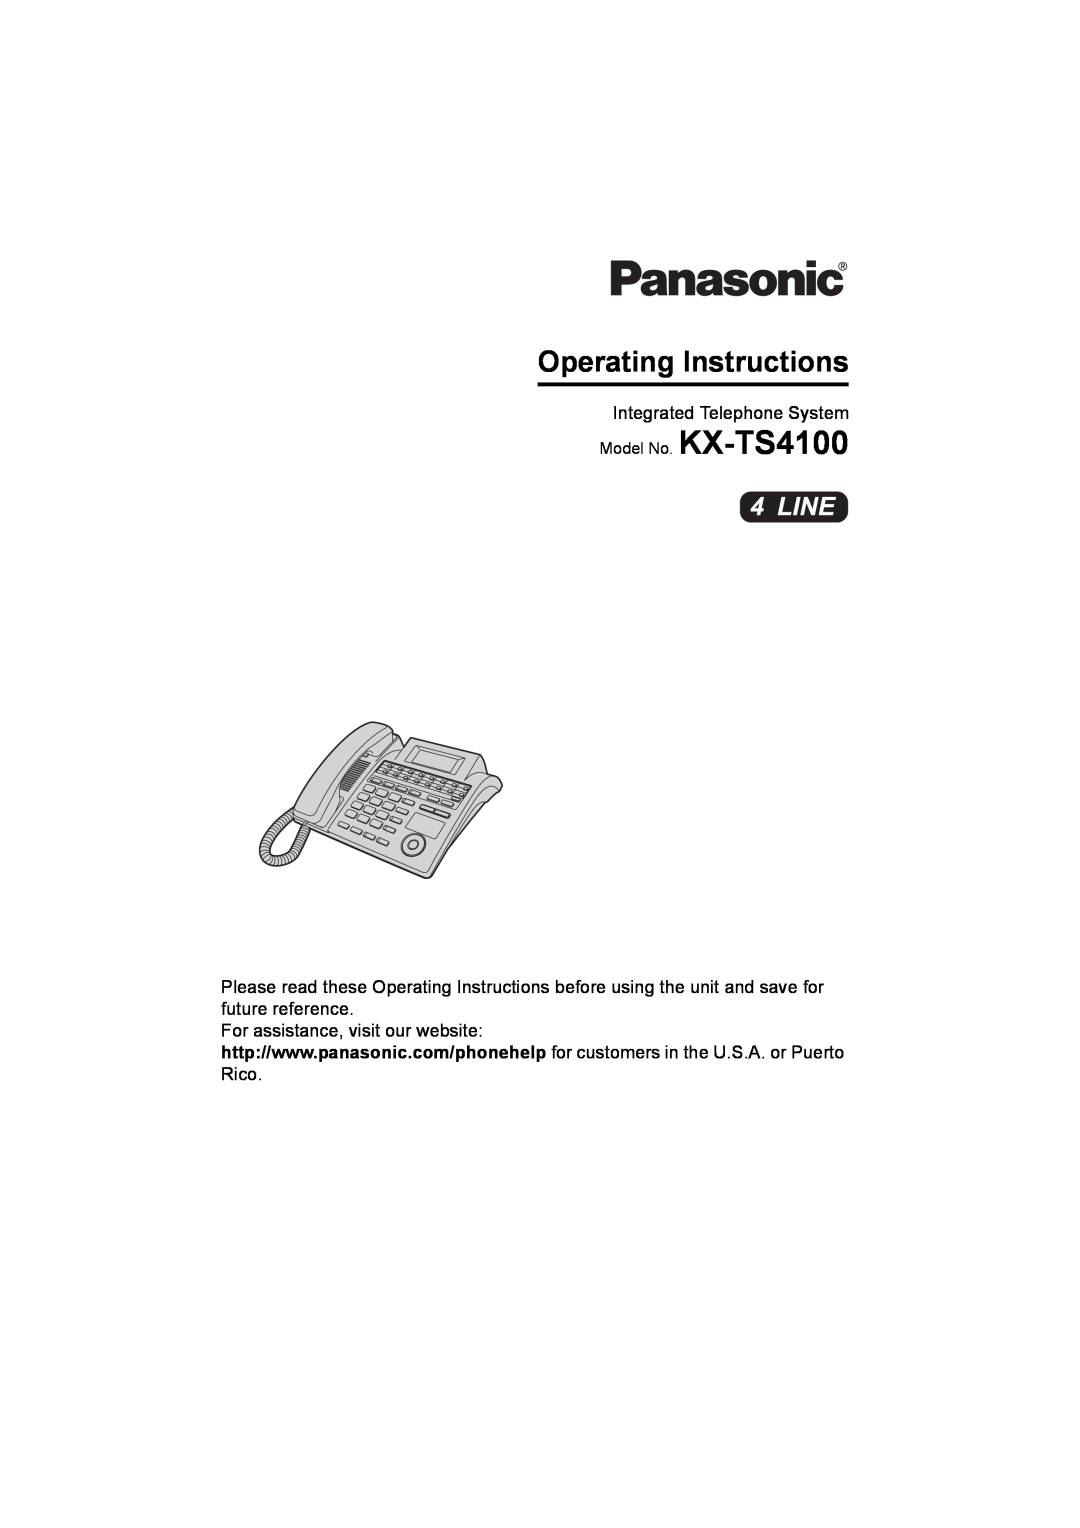 Panasonic KX-TS4100 operating instructions Operating Instructions, Integrated Telephone System 